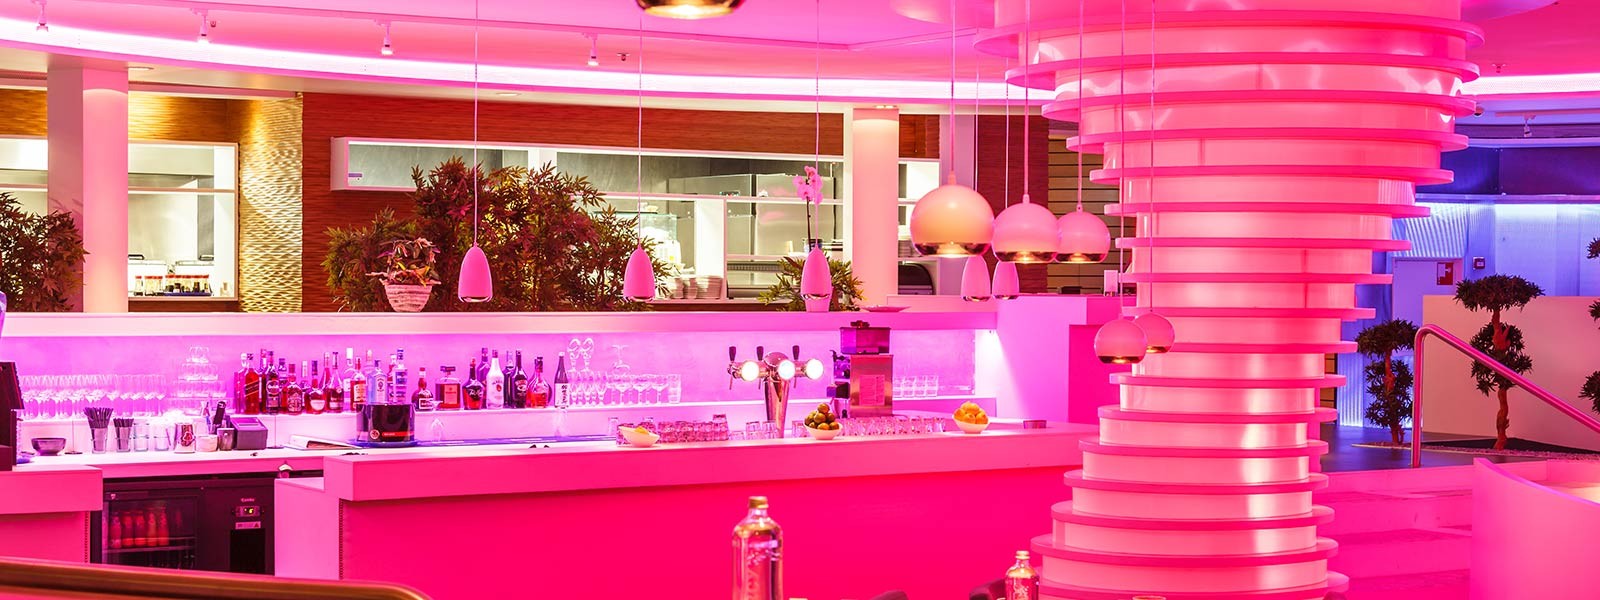 Shiki Sushi en Lounge, Rotterdam